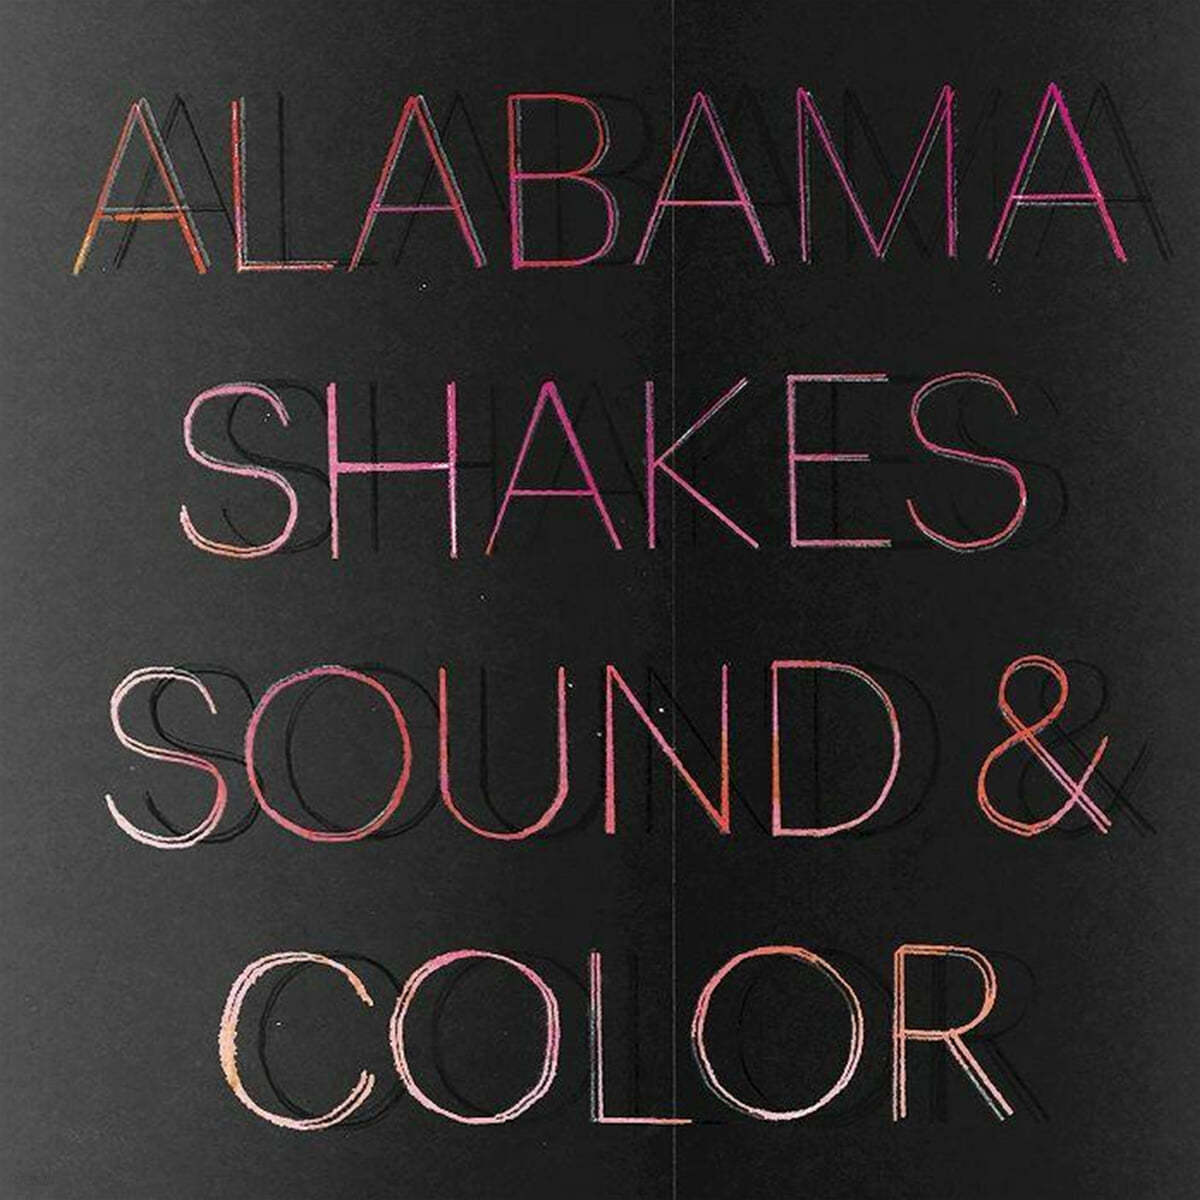 Alabama Shakes (알라바마 쉐이크스) - Sound & Color [레드블랙 & 핑크블랙 컬러 2LP]